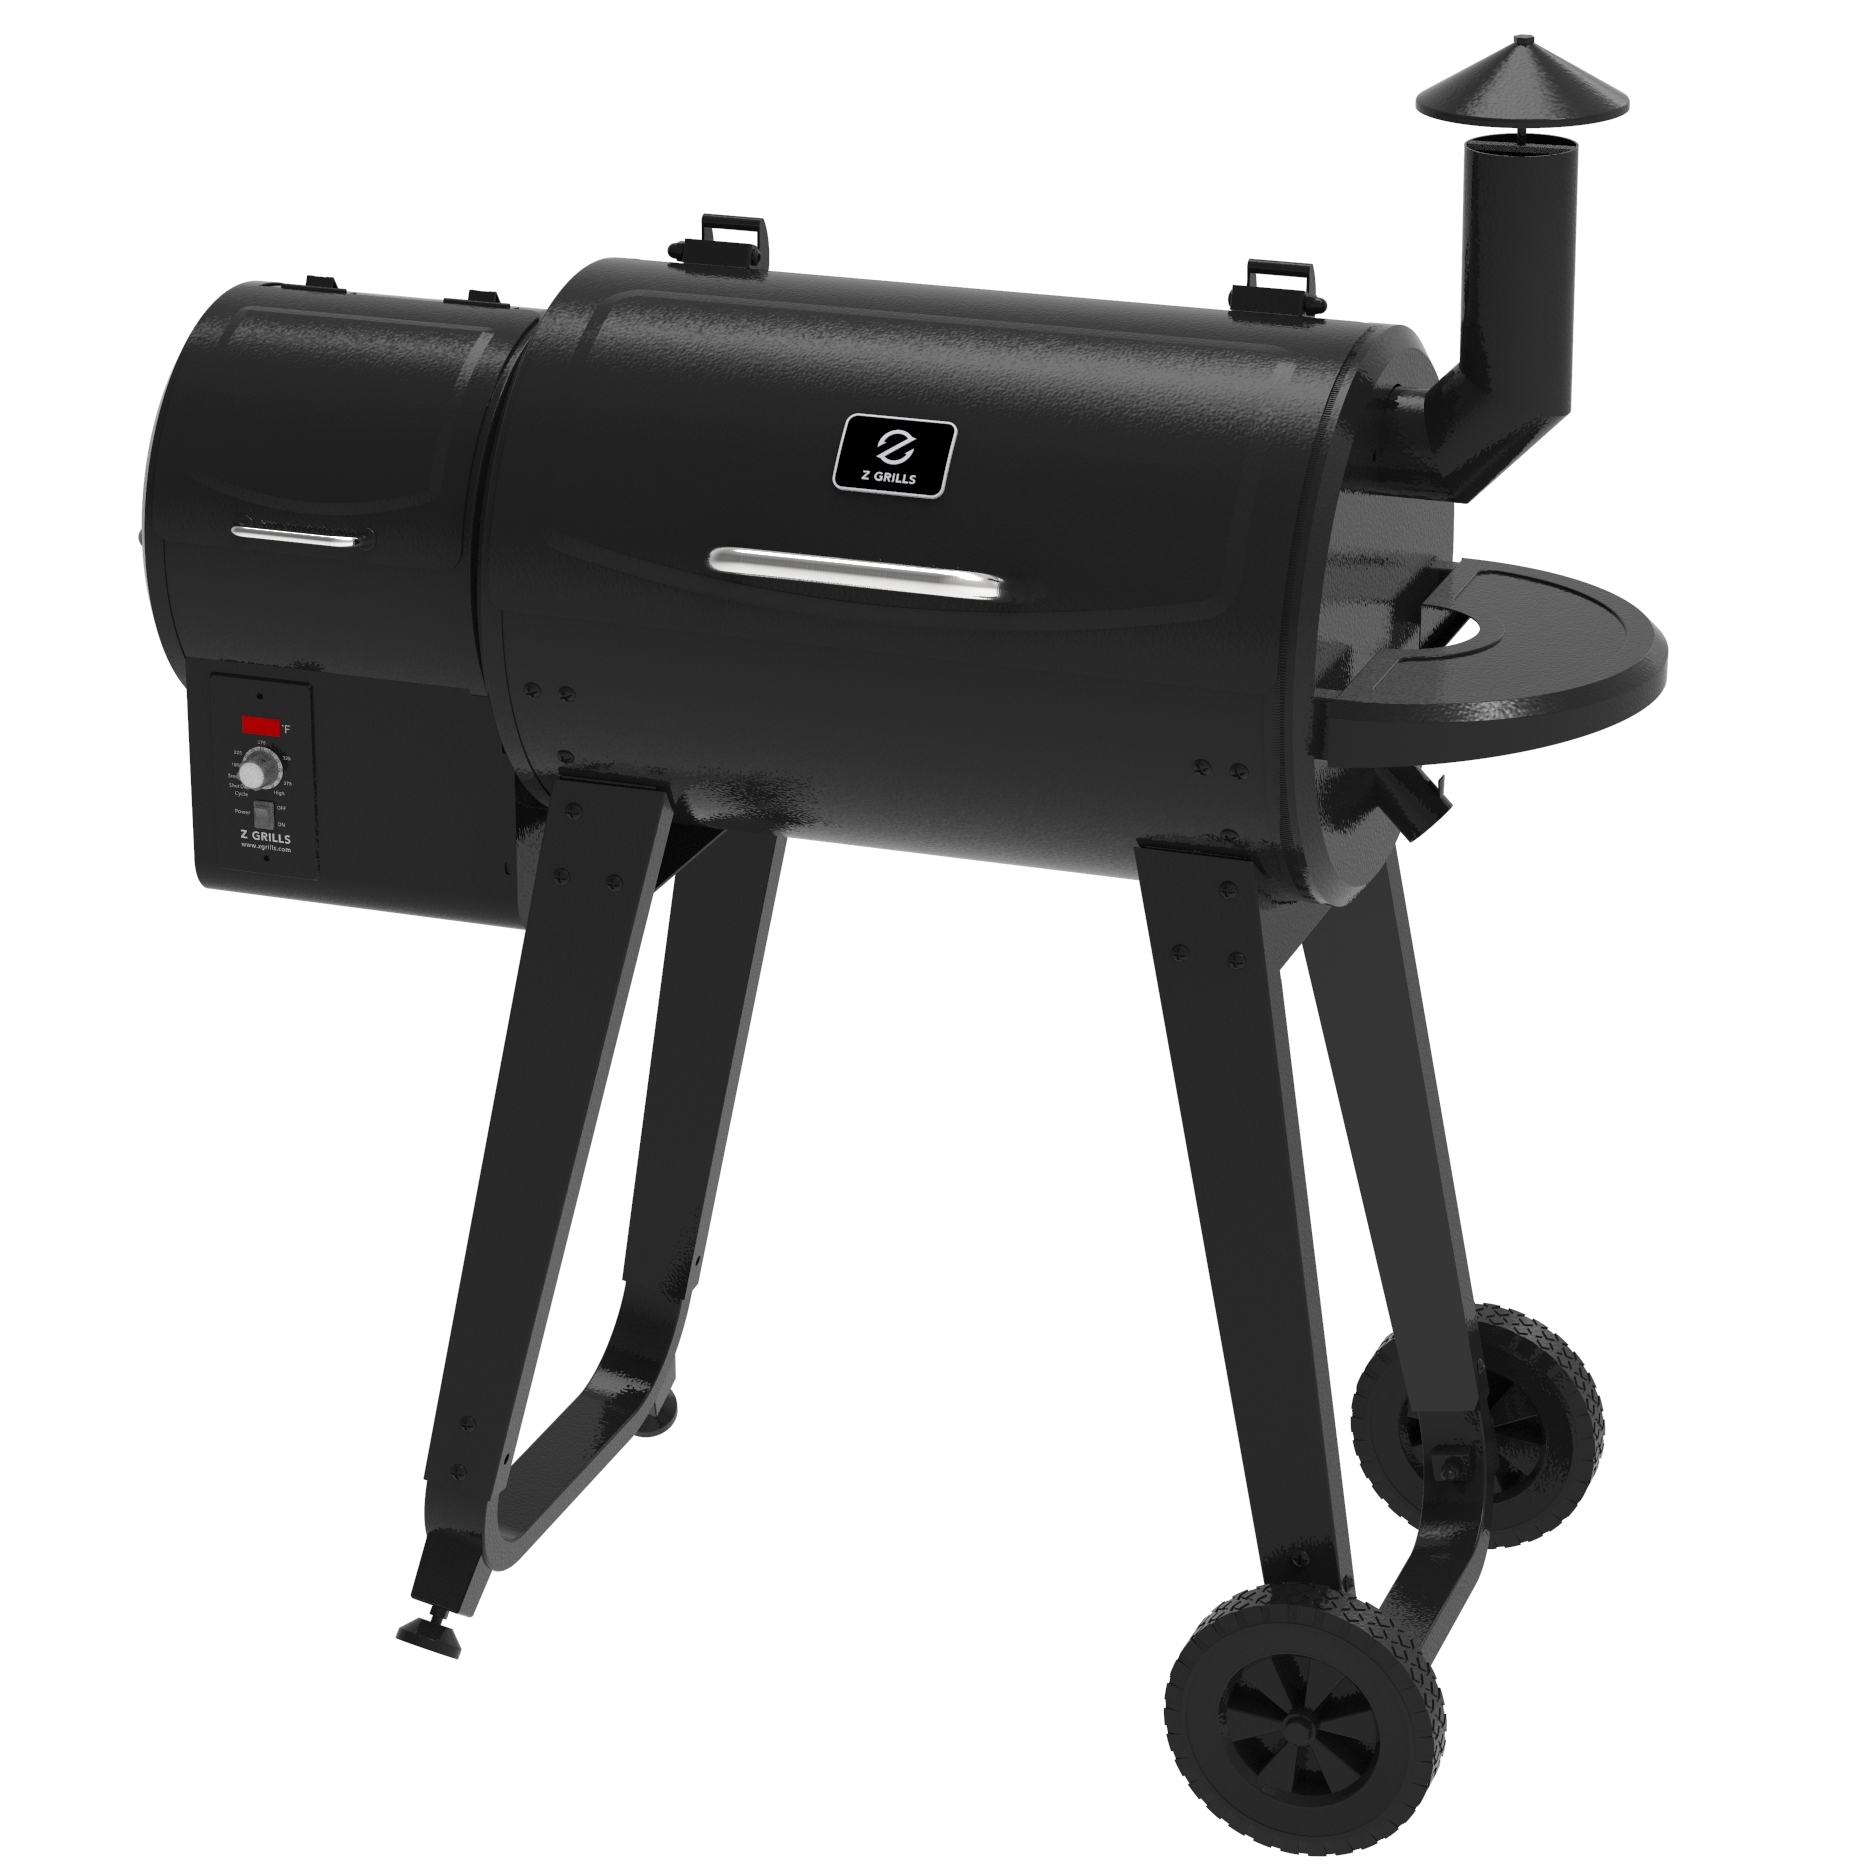 Z GRILLS ZPG-450A3 Wood Pellet Grill & Smoker 8-in-1 BBQ 2022 model, Black - image 2 of 11